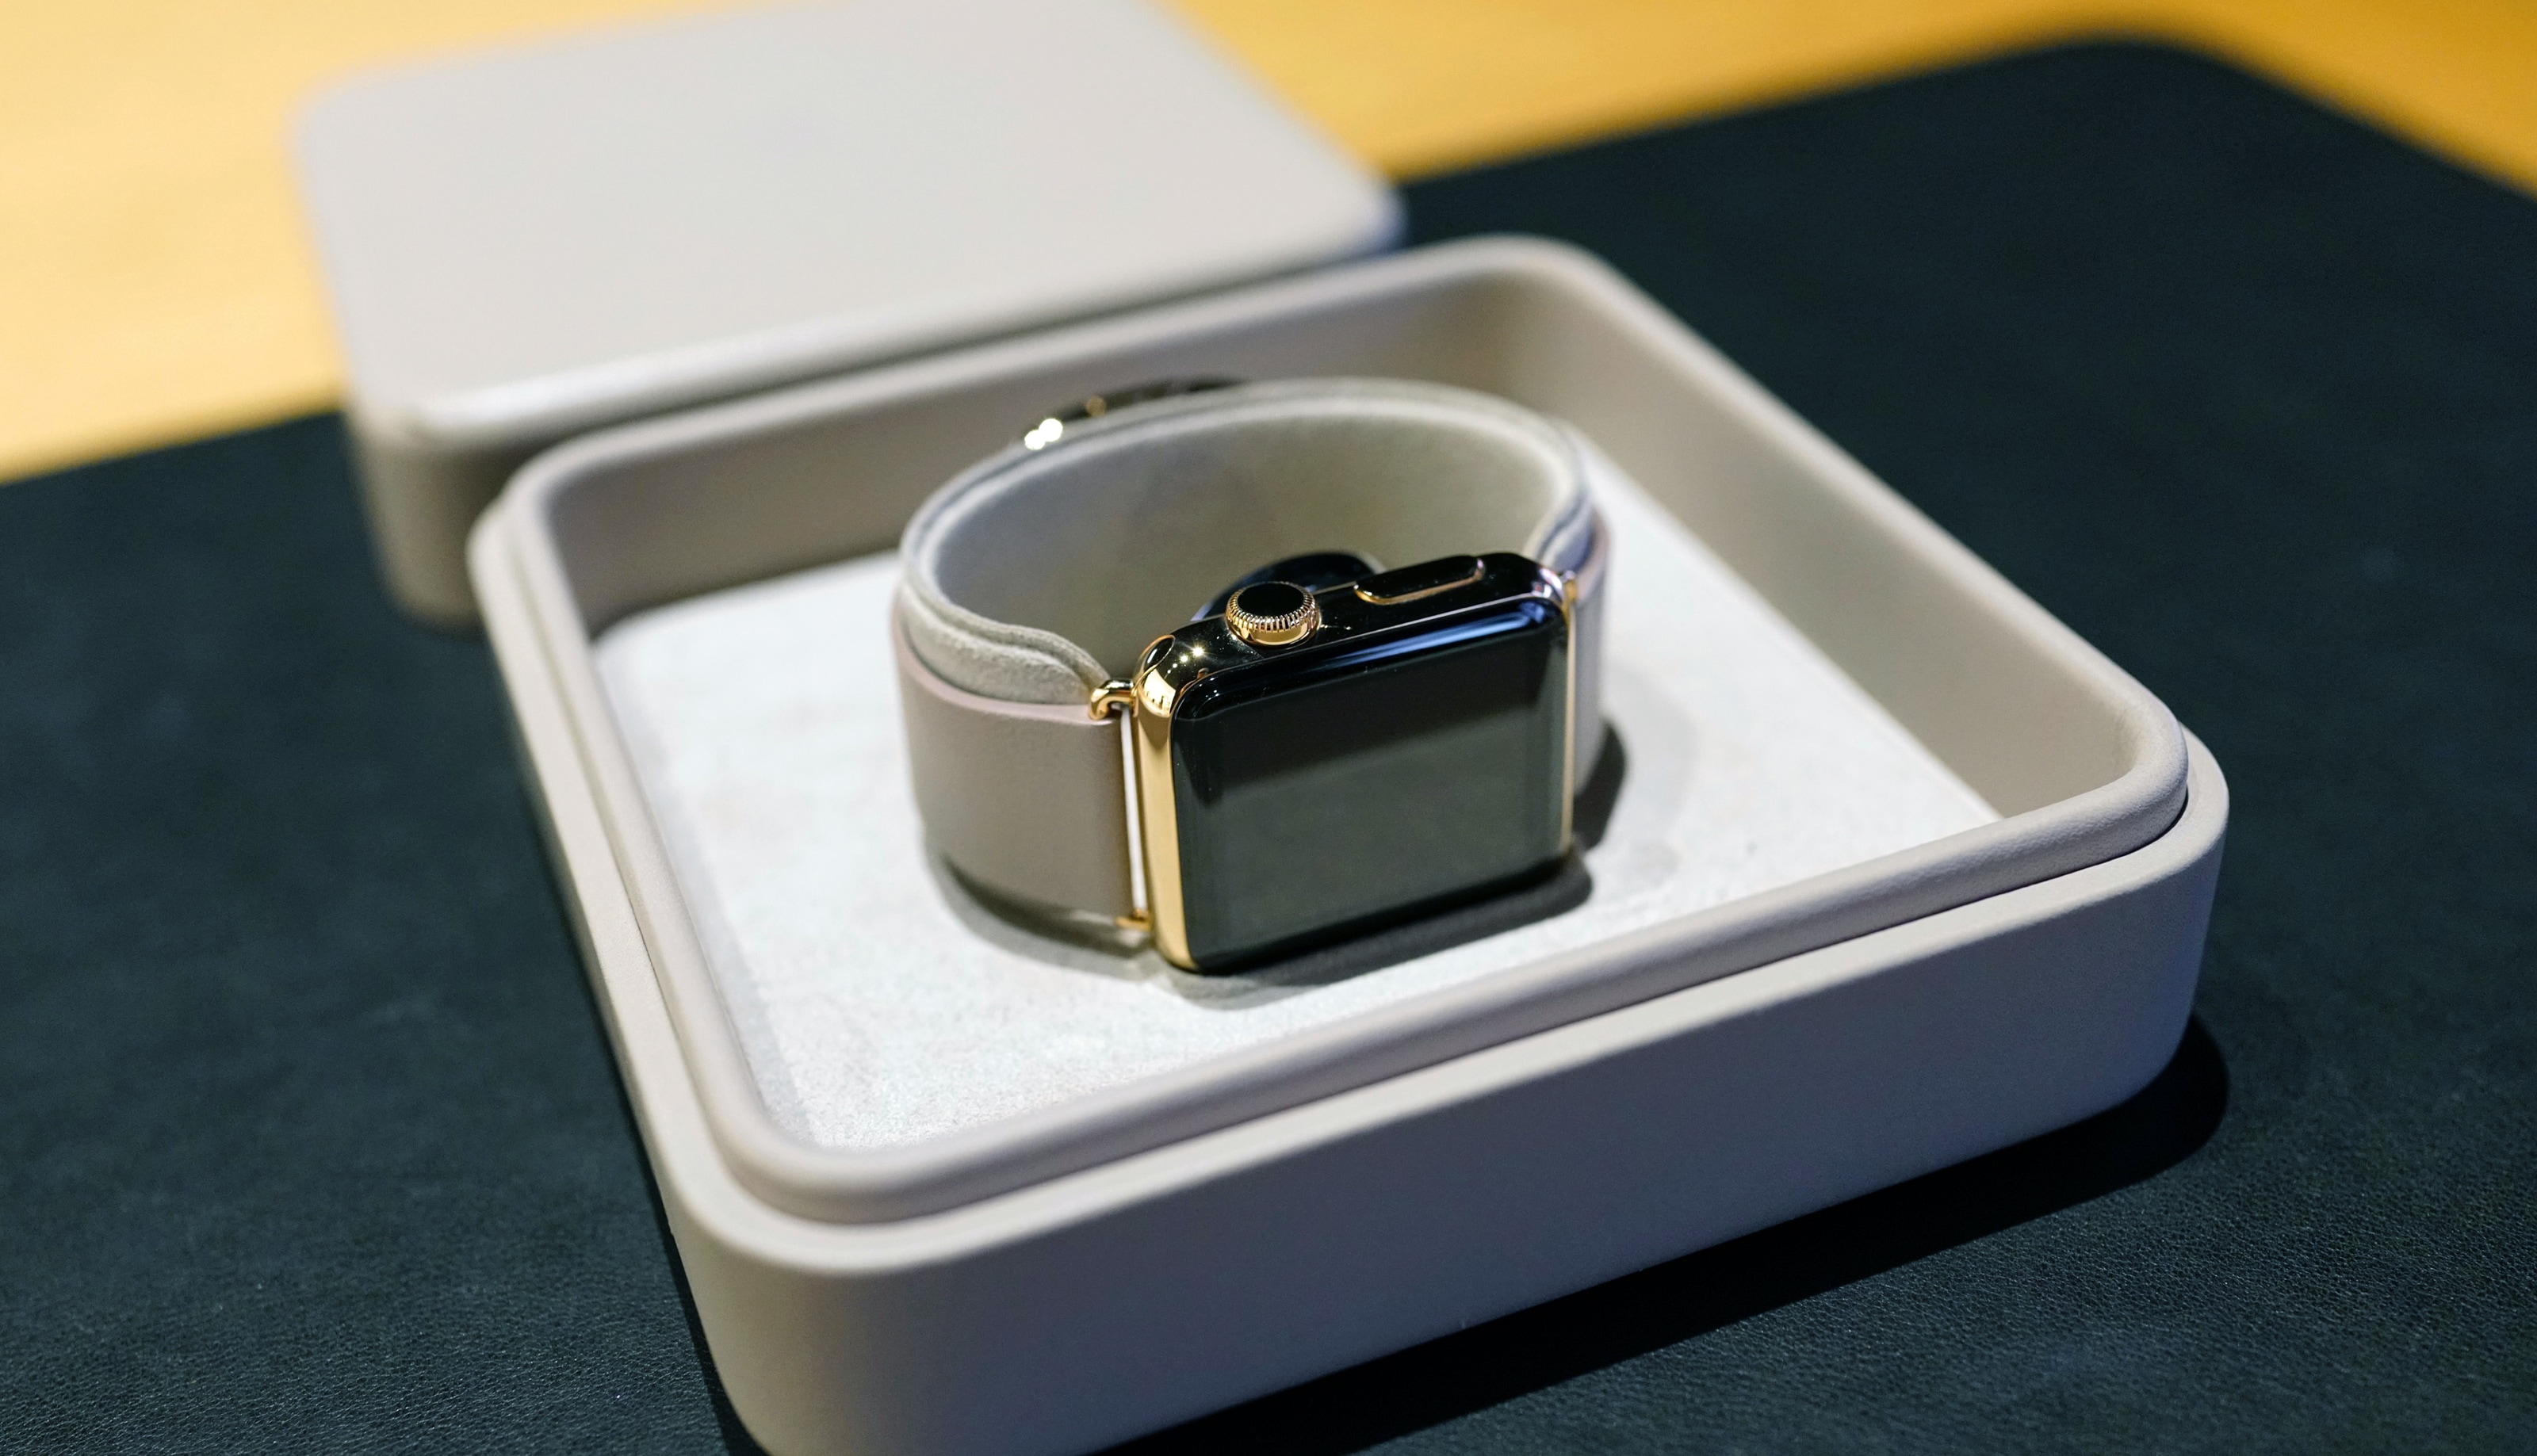 Golden Apple Watch Edition still on sale